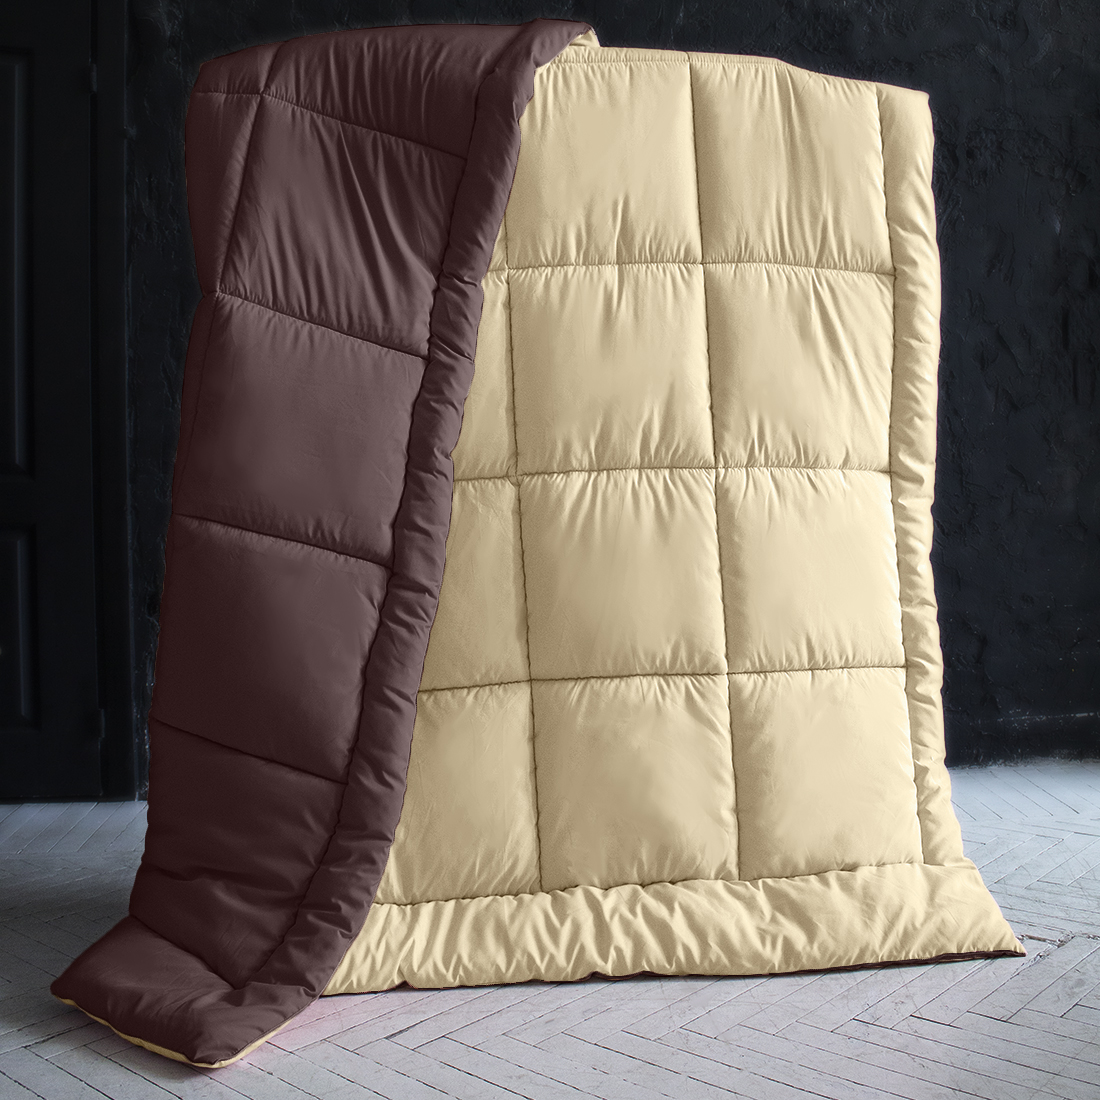 Одеяло MultiColor цвет: темно-коричневый, бежевый (220х240 см), размер 220х240 см pva319984 Одеяло MultiColor цвет: темно-коричневый, бежевый (220х240 см) - фото 1